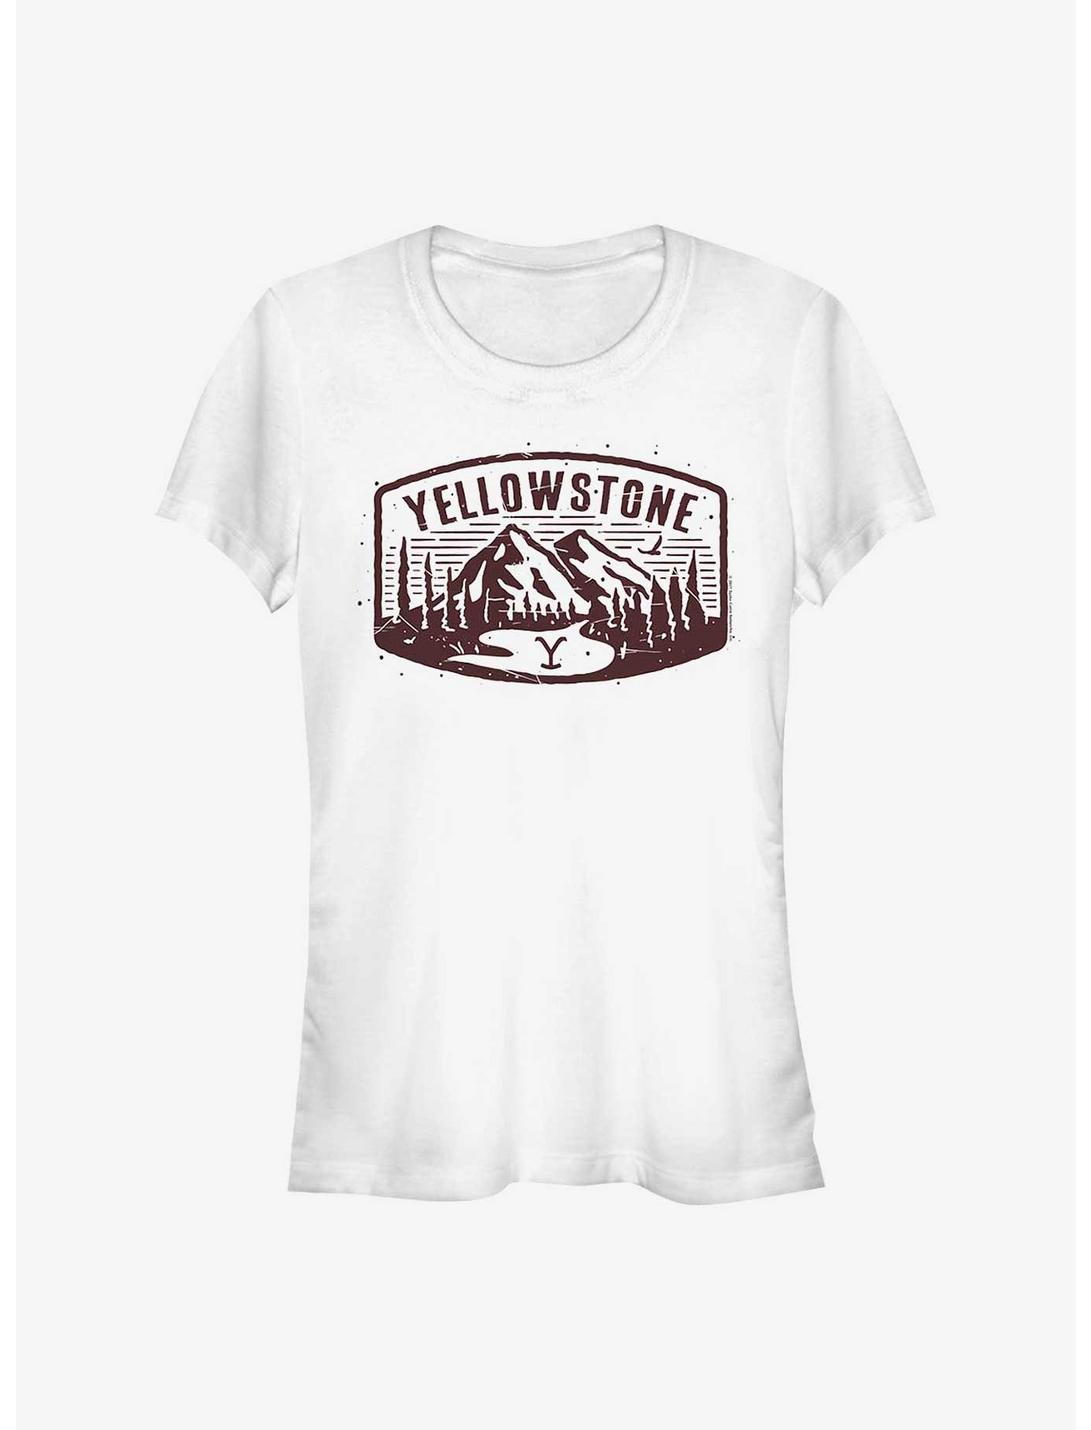 Yellowstone Mountains Girls T-Shirt, WHITE, hi-res